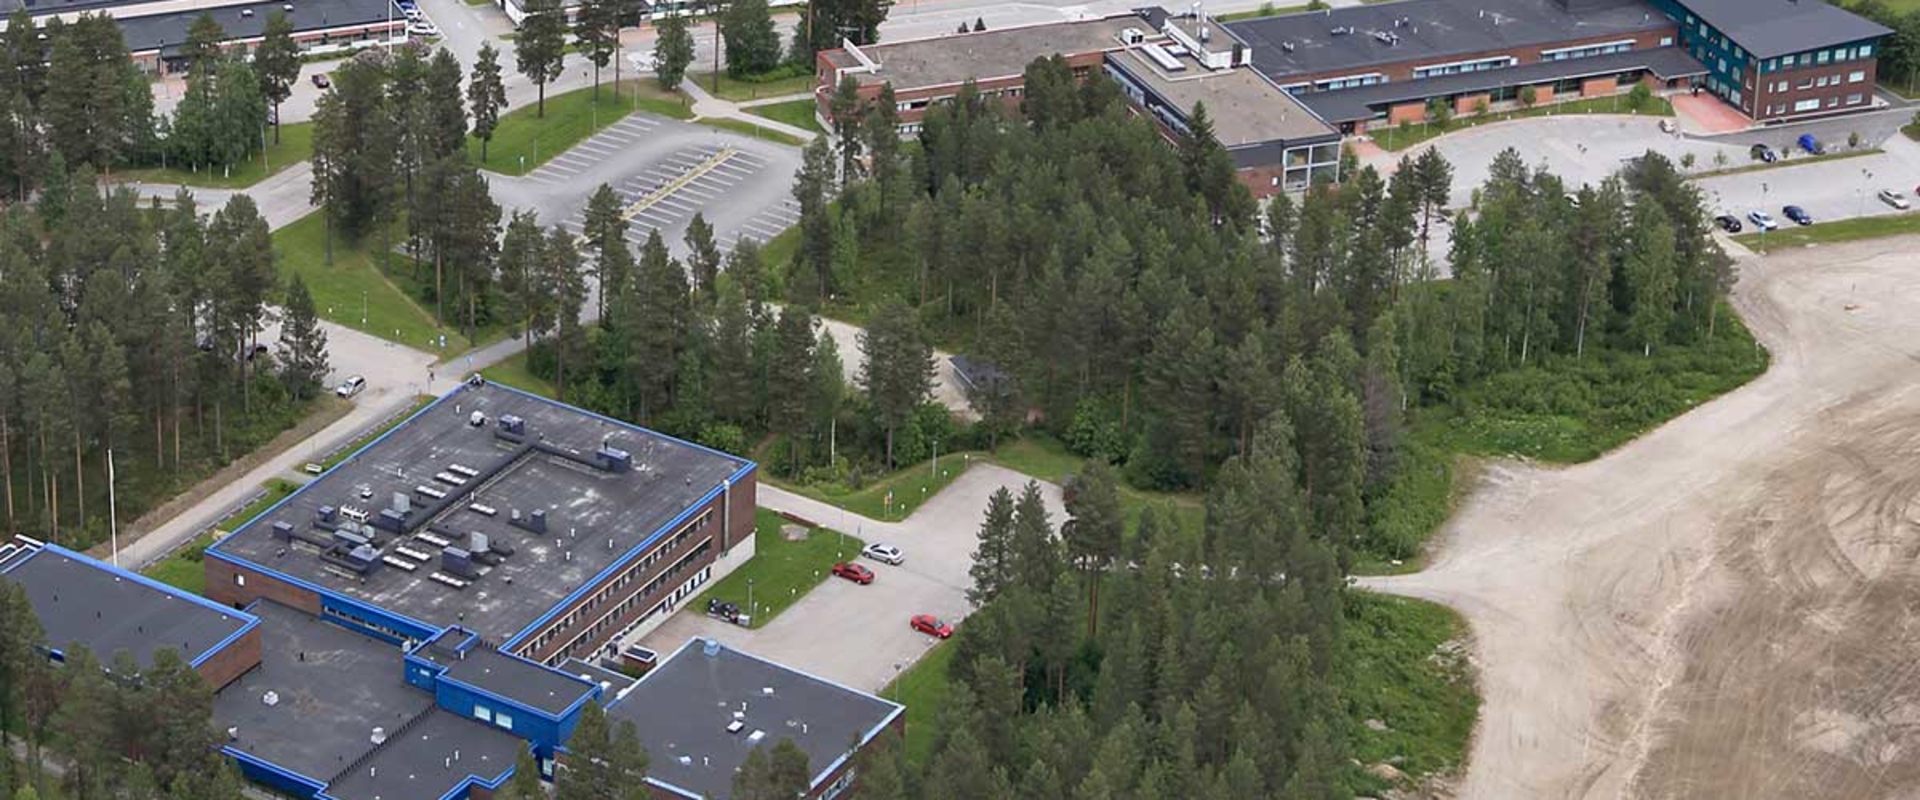 100 fős nyári CS:GO Akadémia indul Finnországban